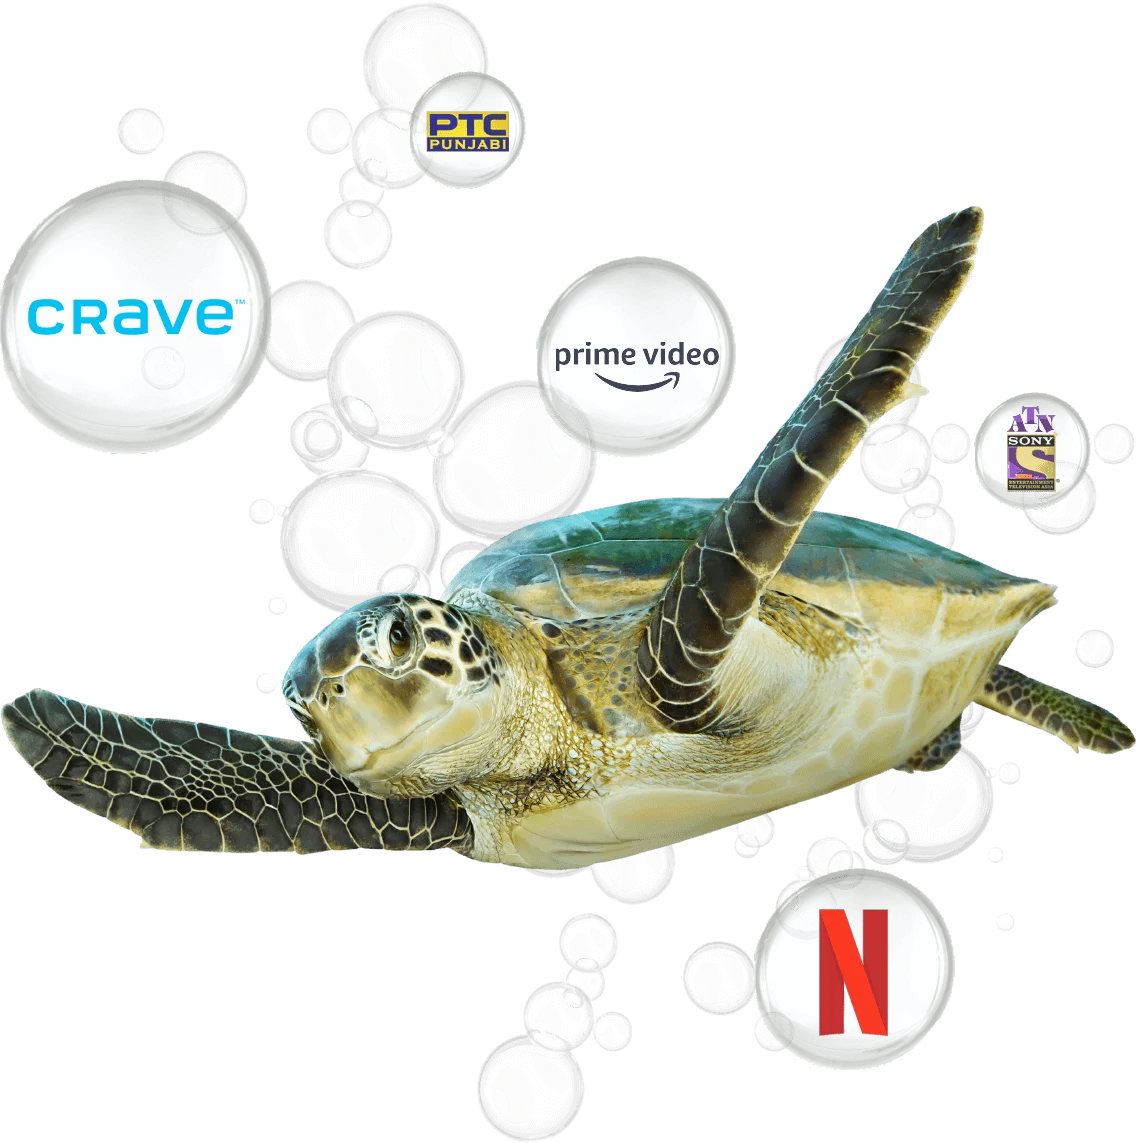 Turtle image with variety of TELUS TV partner logos.